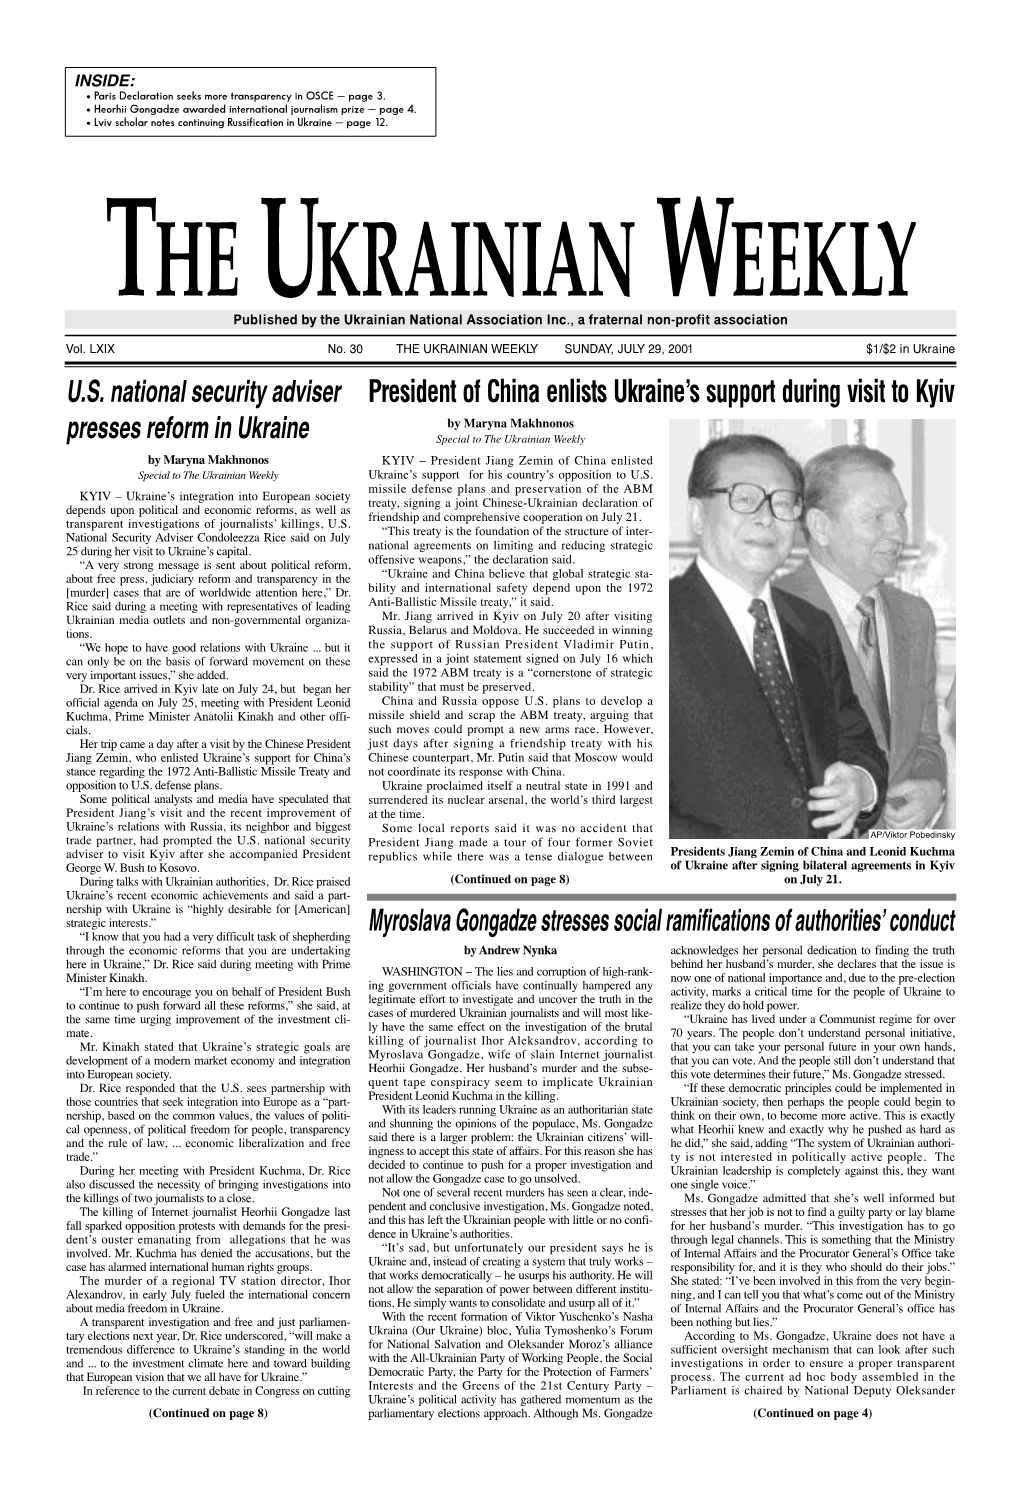 The Ukrainian Weekly 2001, No.30